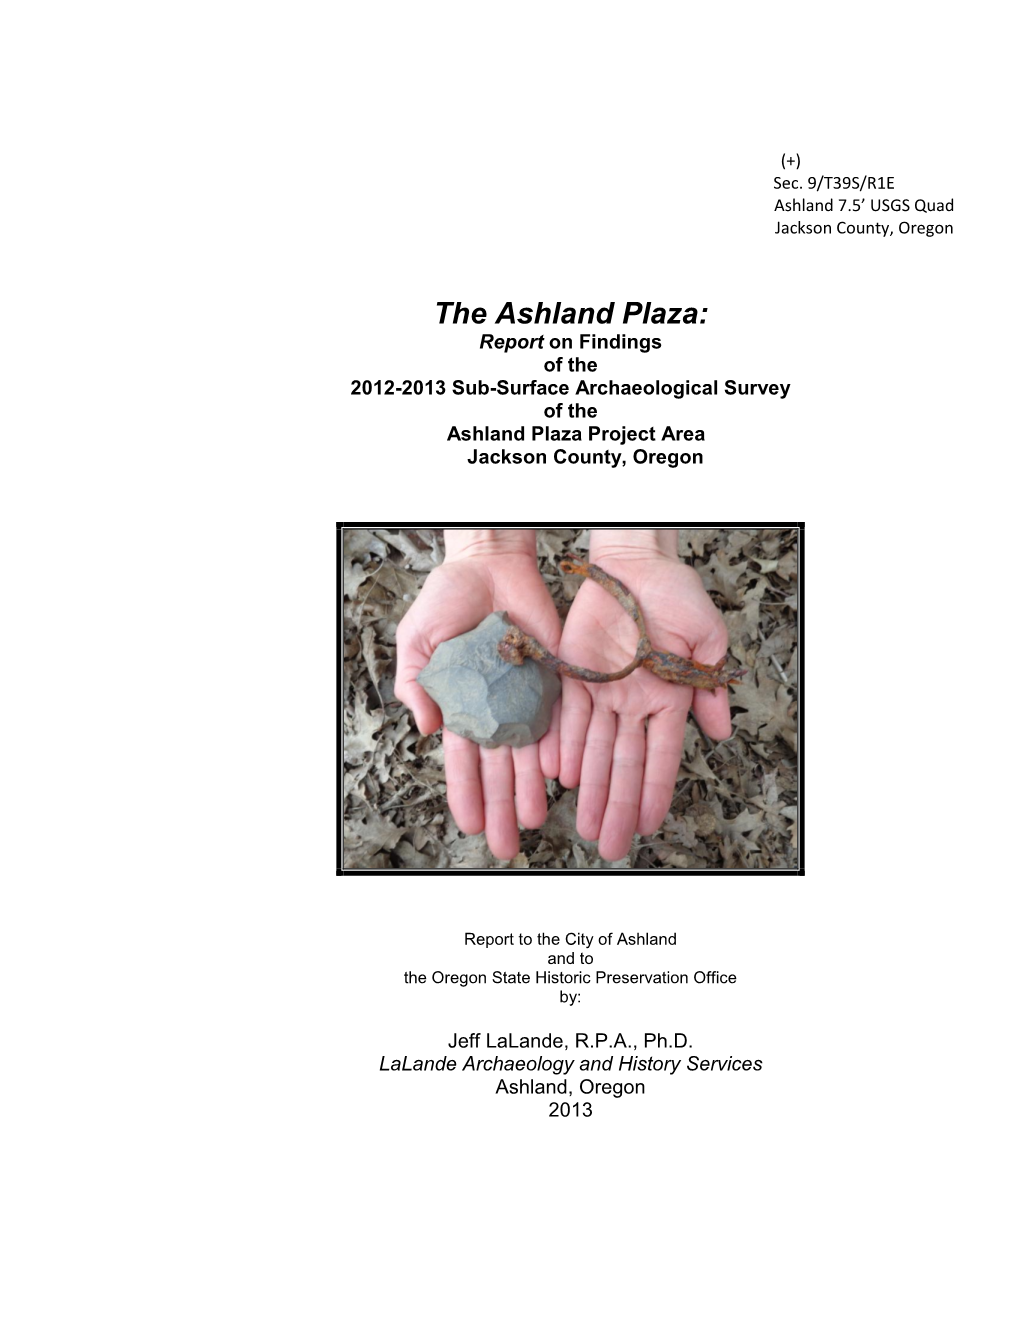 The Ashland Plaza: Report on Findings of the 2012-2013 Sub-Surface Archaeological Survey of the Ashland Plaza Project Area Jackson County, Oregon